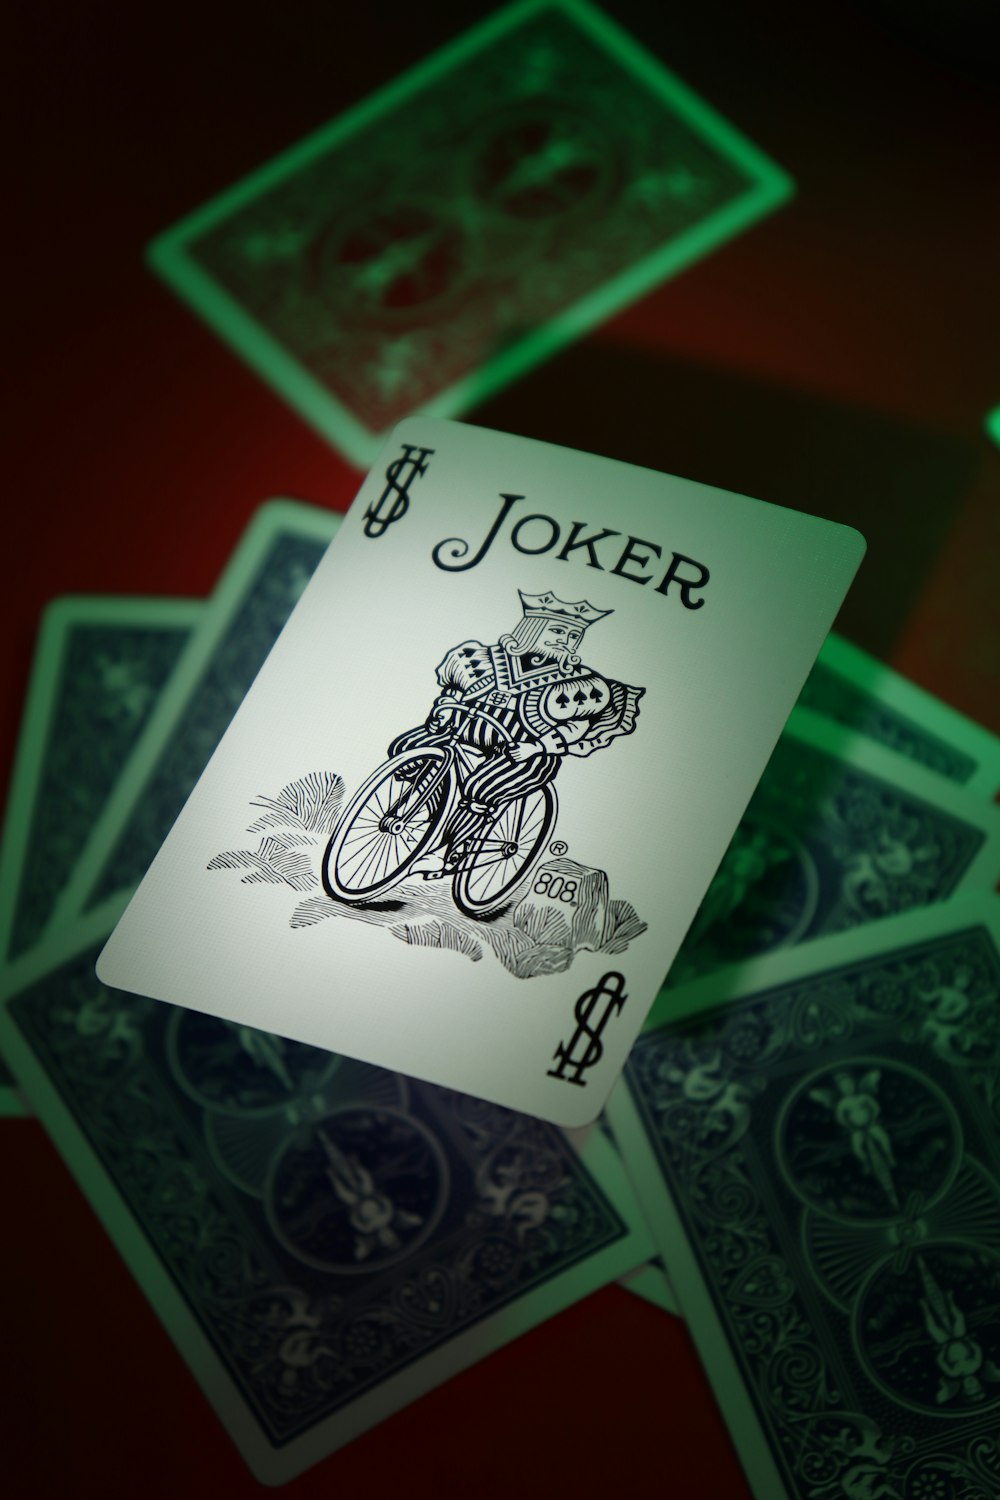 joker playing card on playing cards